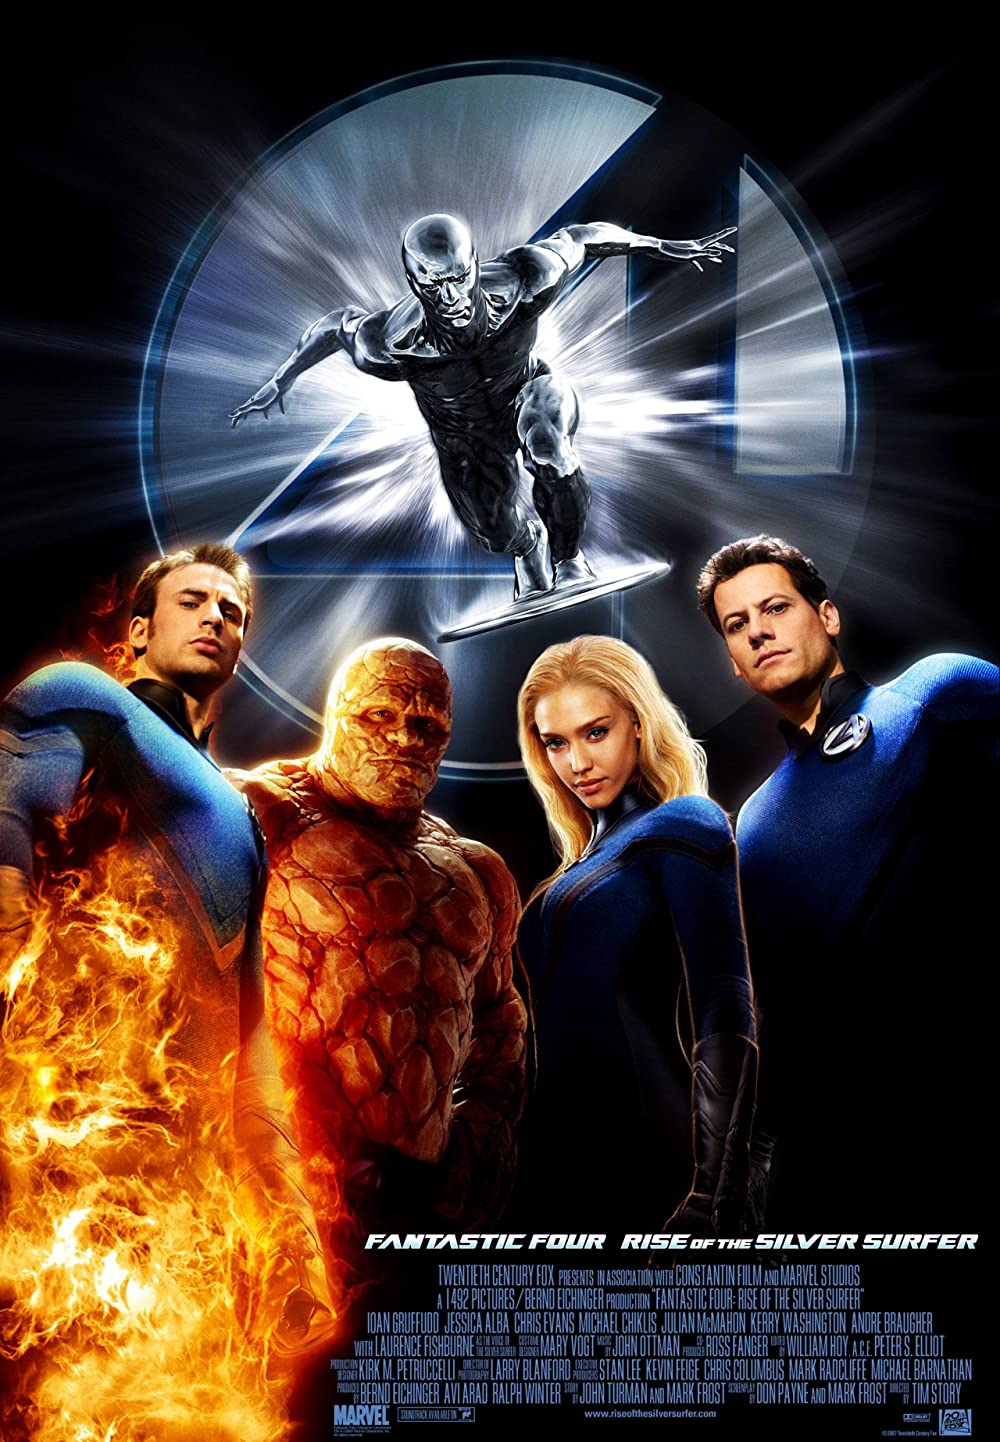 Filmbeschreibung zu Fantastic Four - Rise of the Silver Surfer